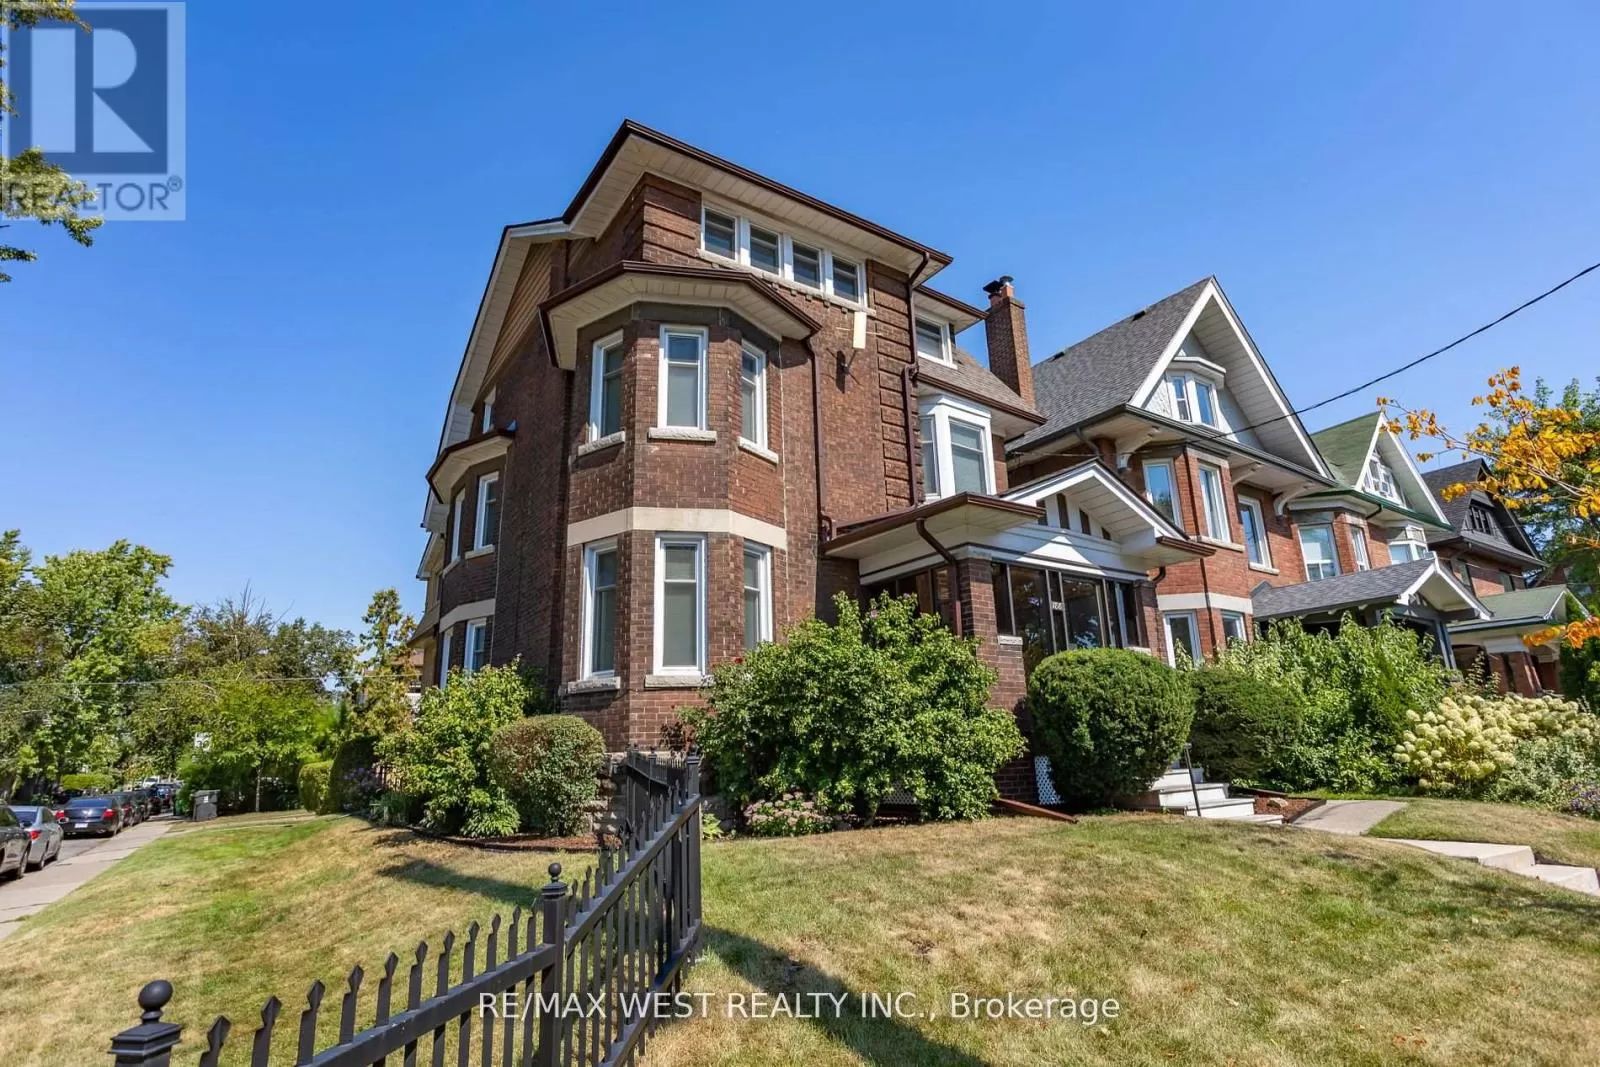 House for rent: 188 Humberside Avenue, Toronto, Ontario M6P 1K5